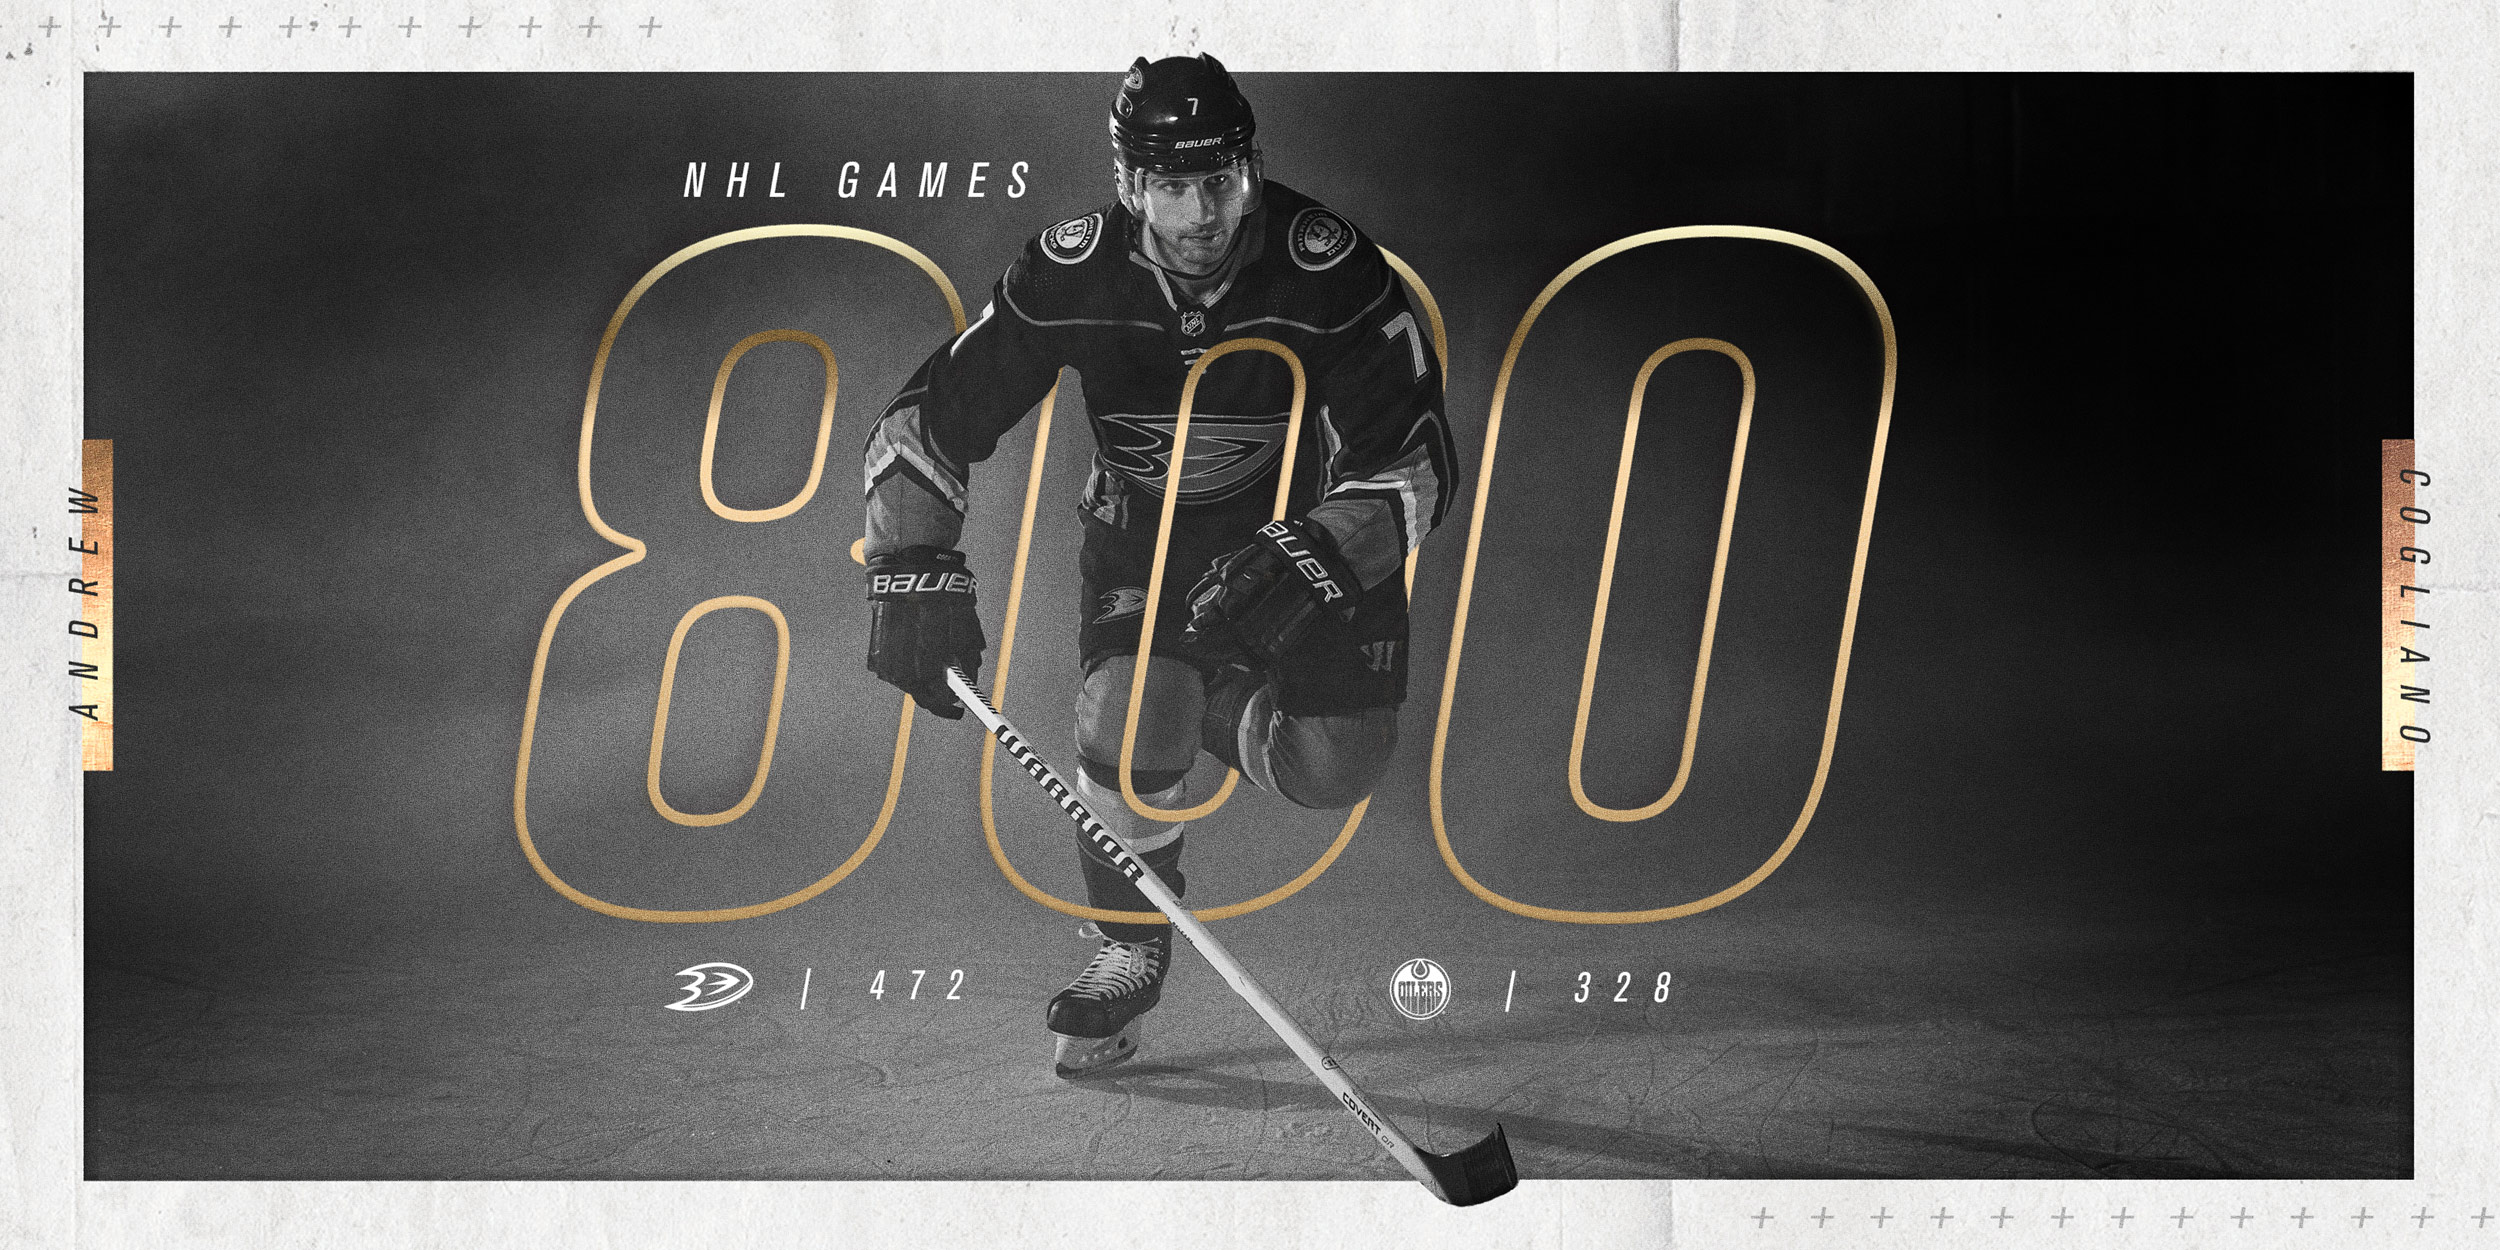 Cogs_800_NHLGames_Twitter-web